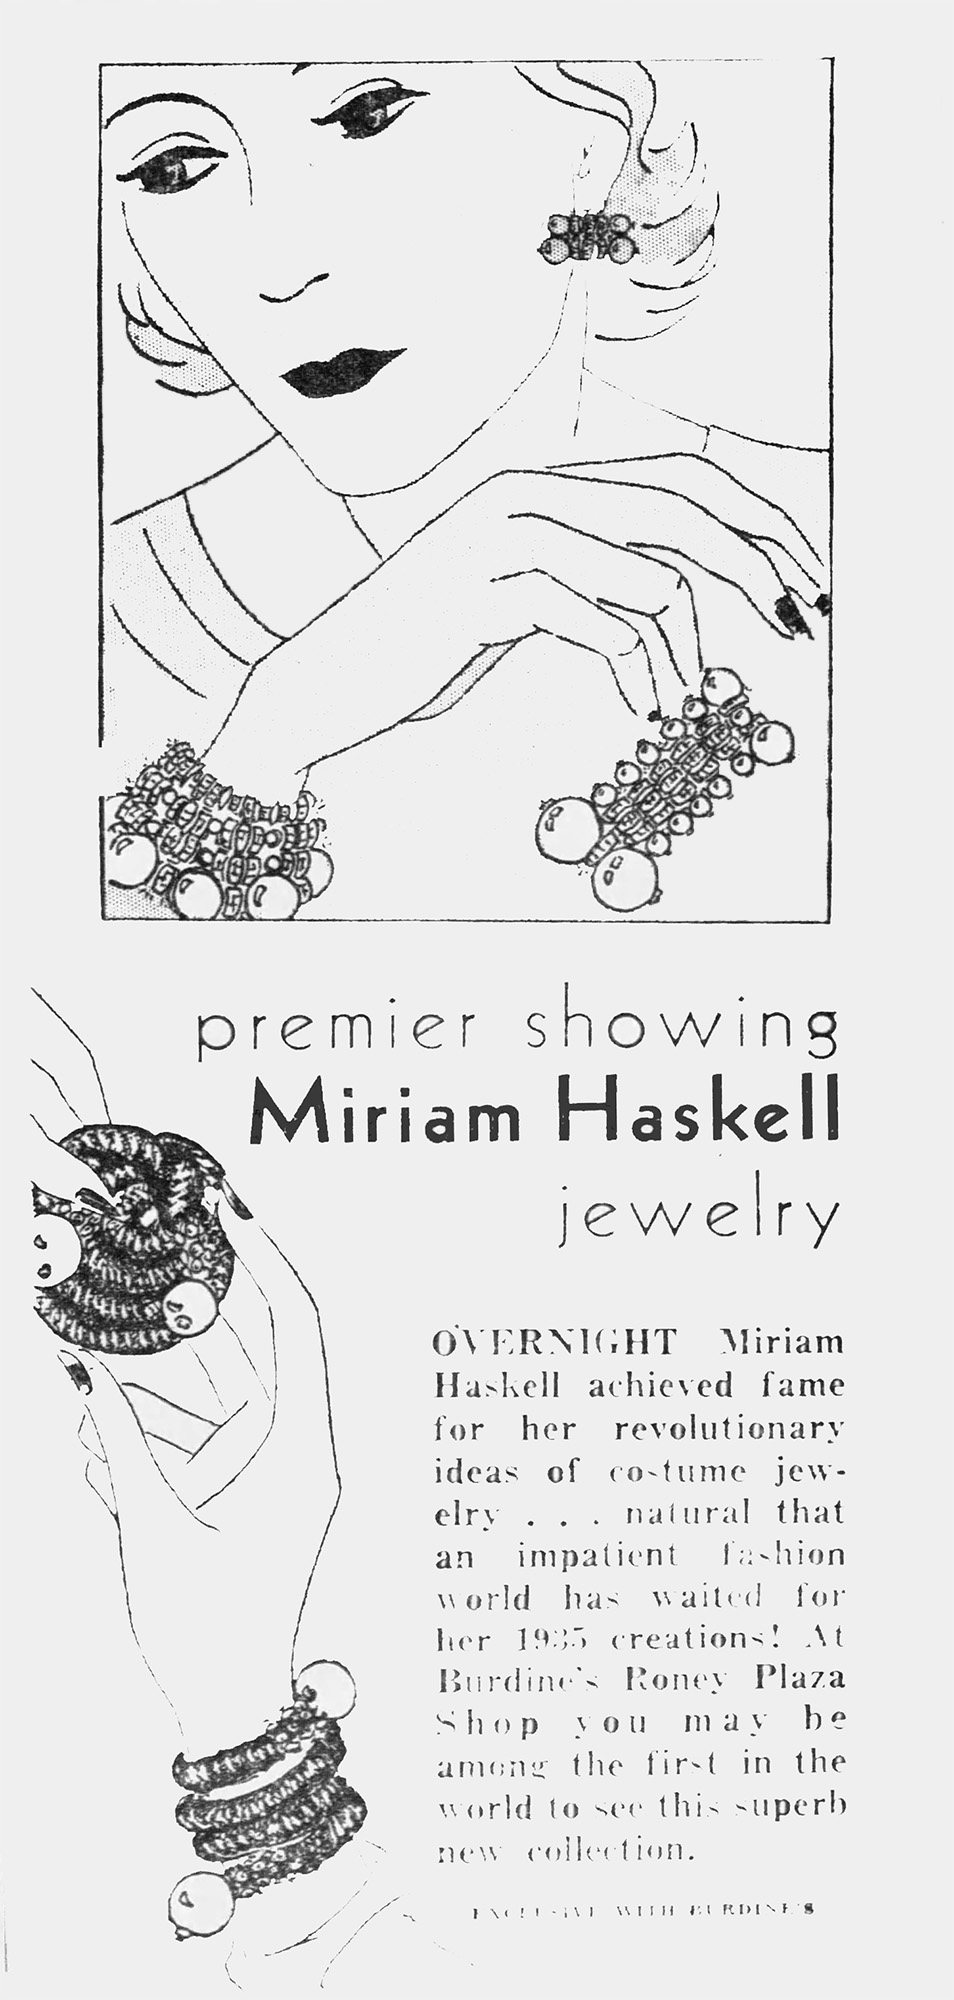 Miriam Haskell 1933 jewelry advertisement